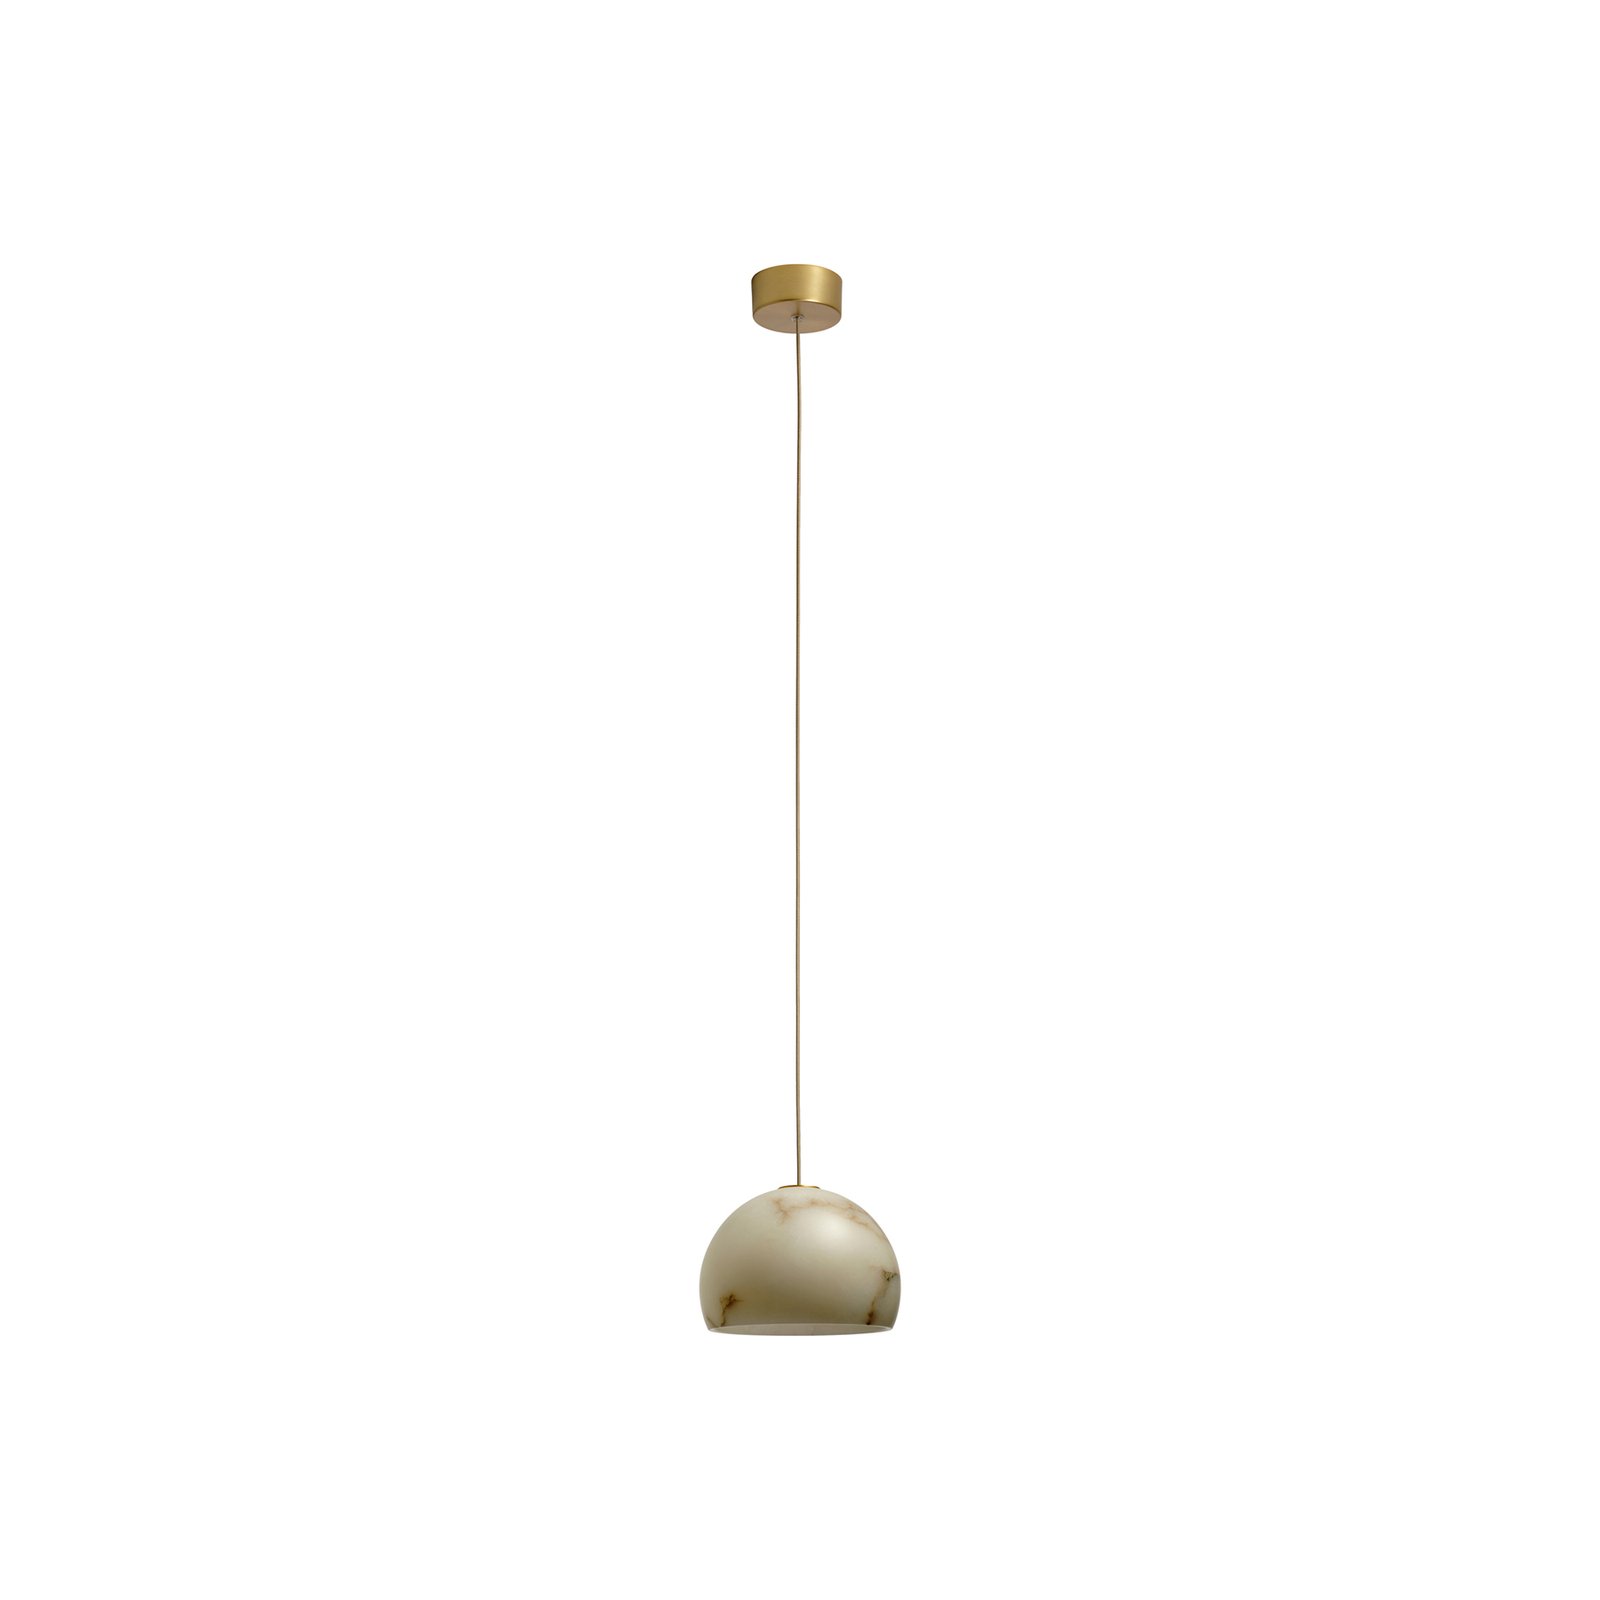 Neil LED hanglamp, Alabast, goud, Ø 21cm